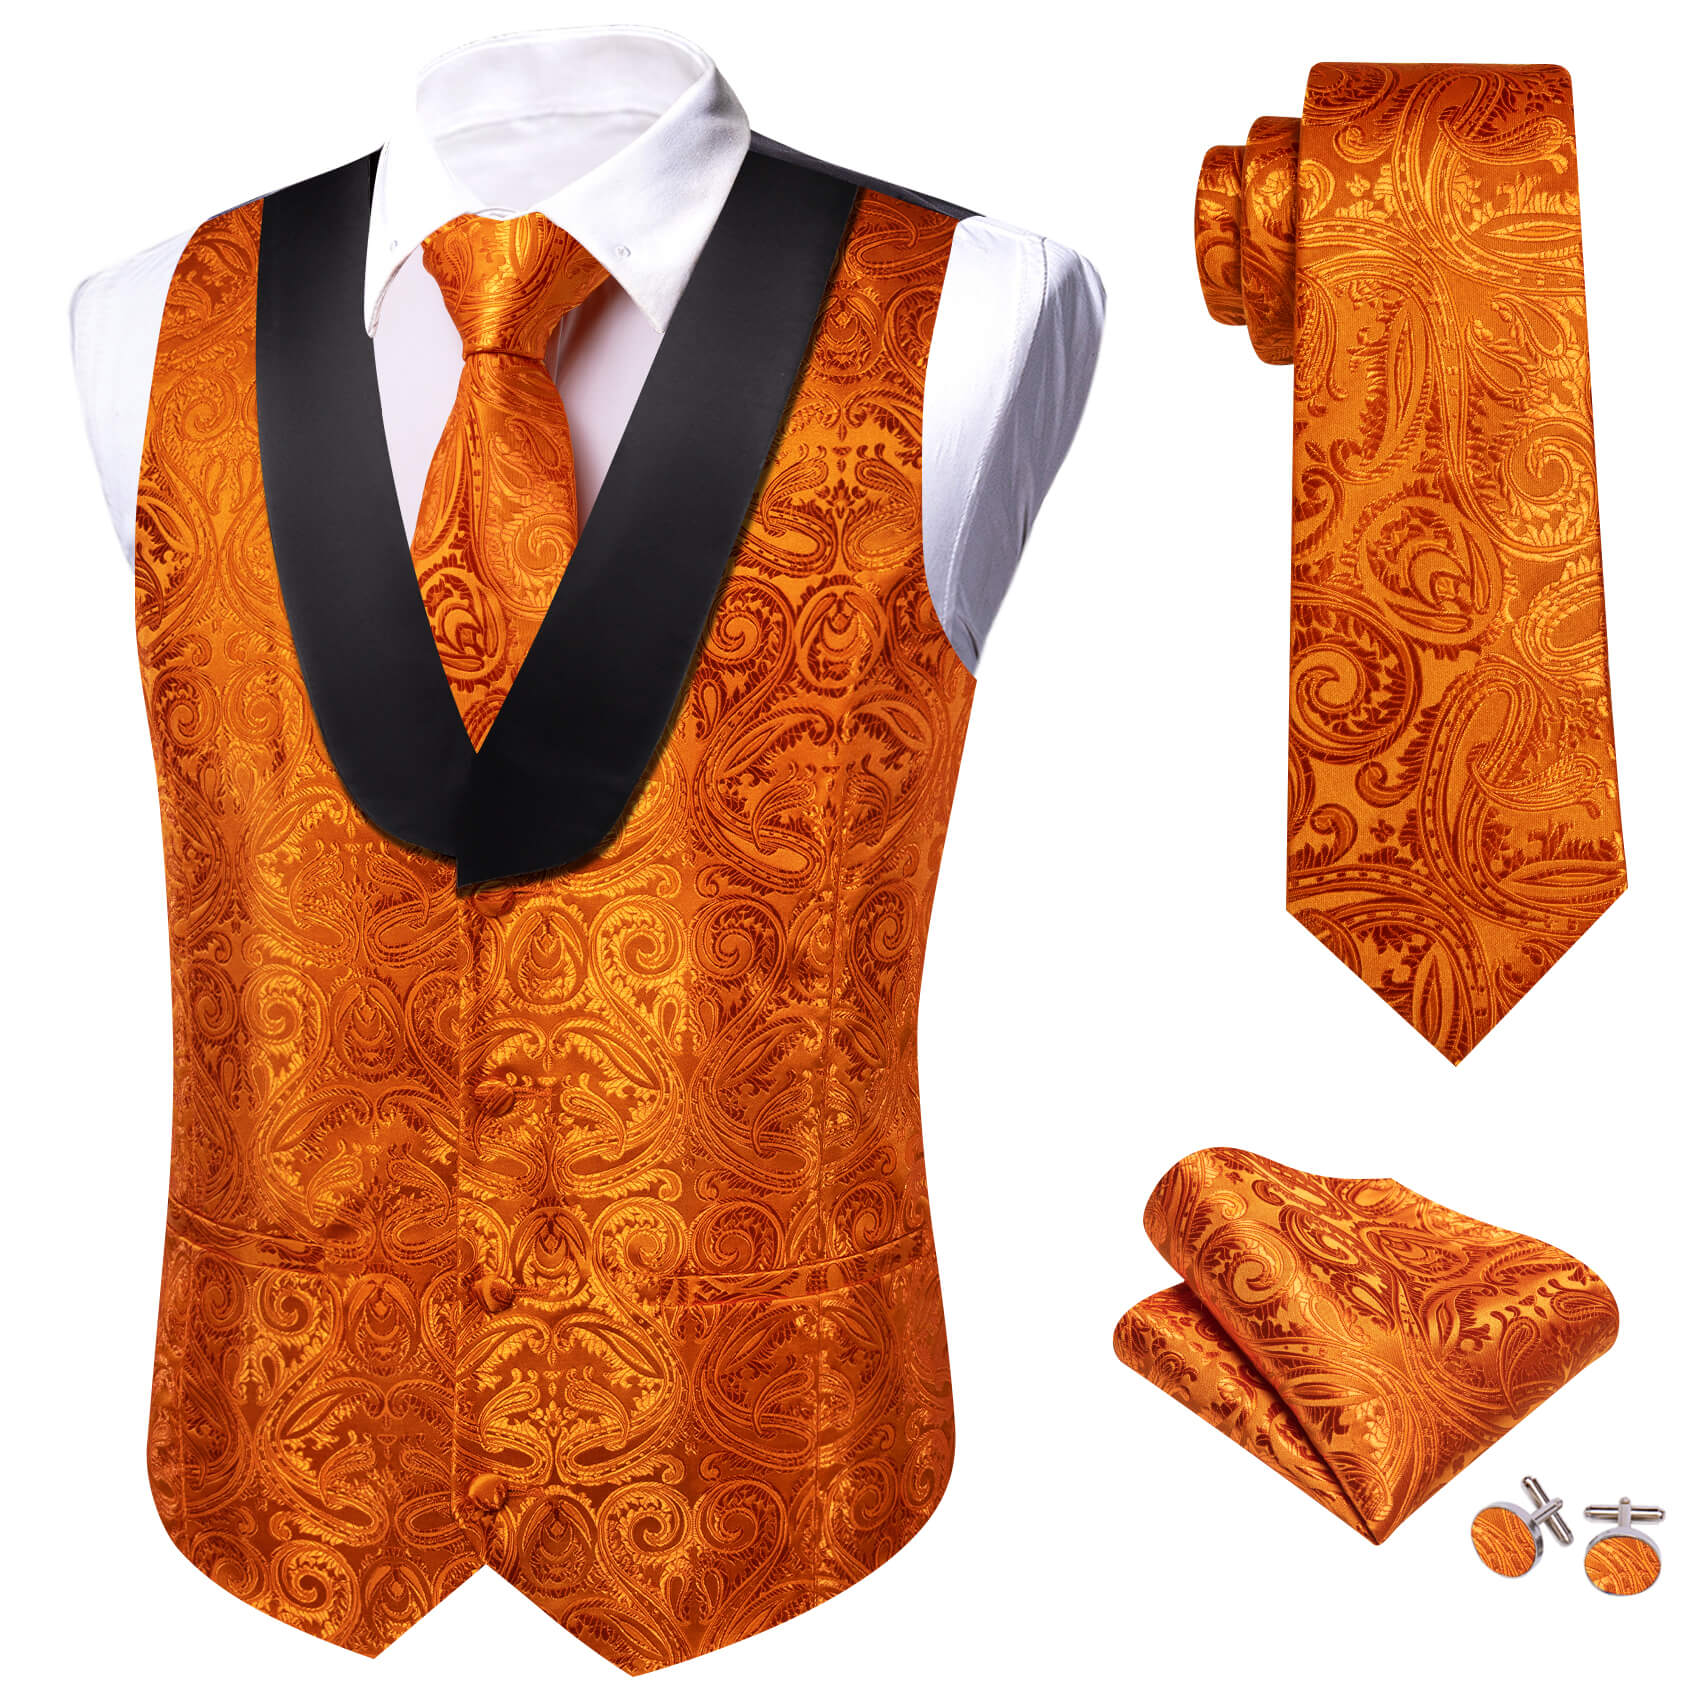 Barry.wang Men's Vest Fire Orange Paisley Shawl Collar Silk Vest Tie Set